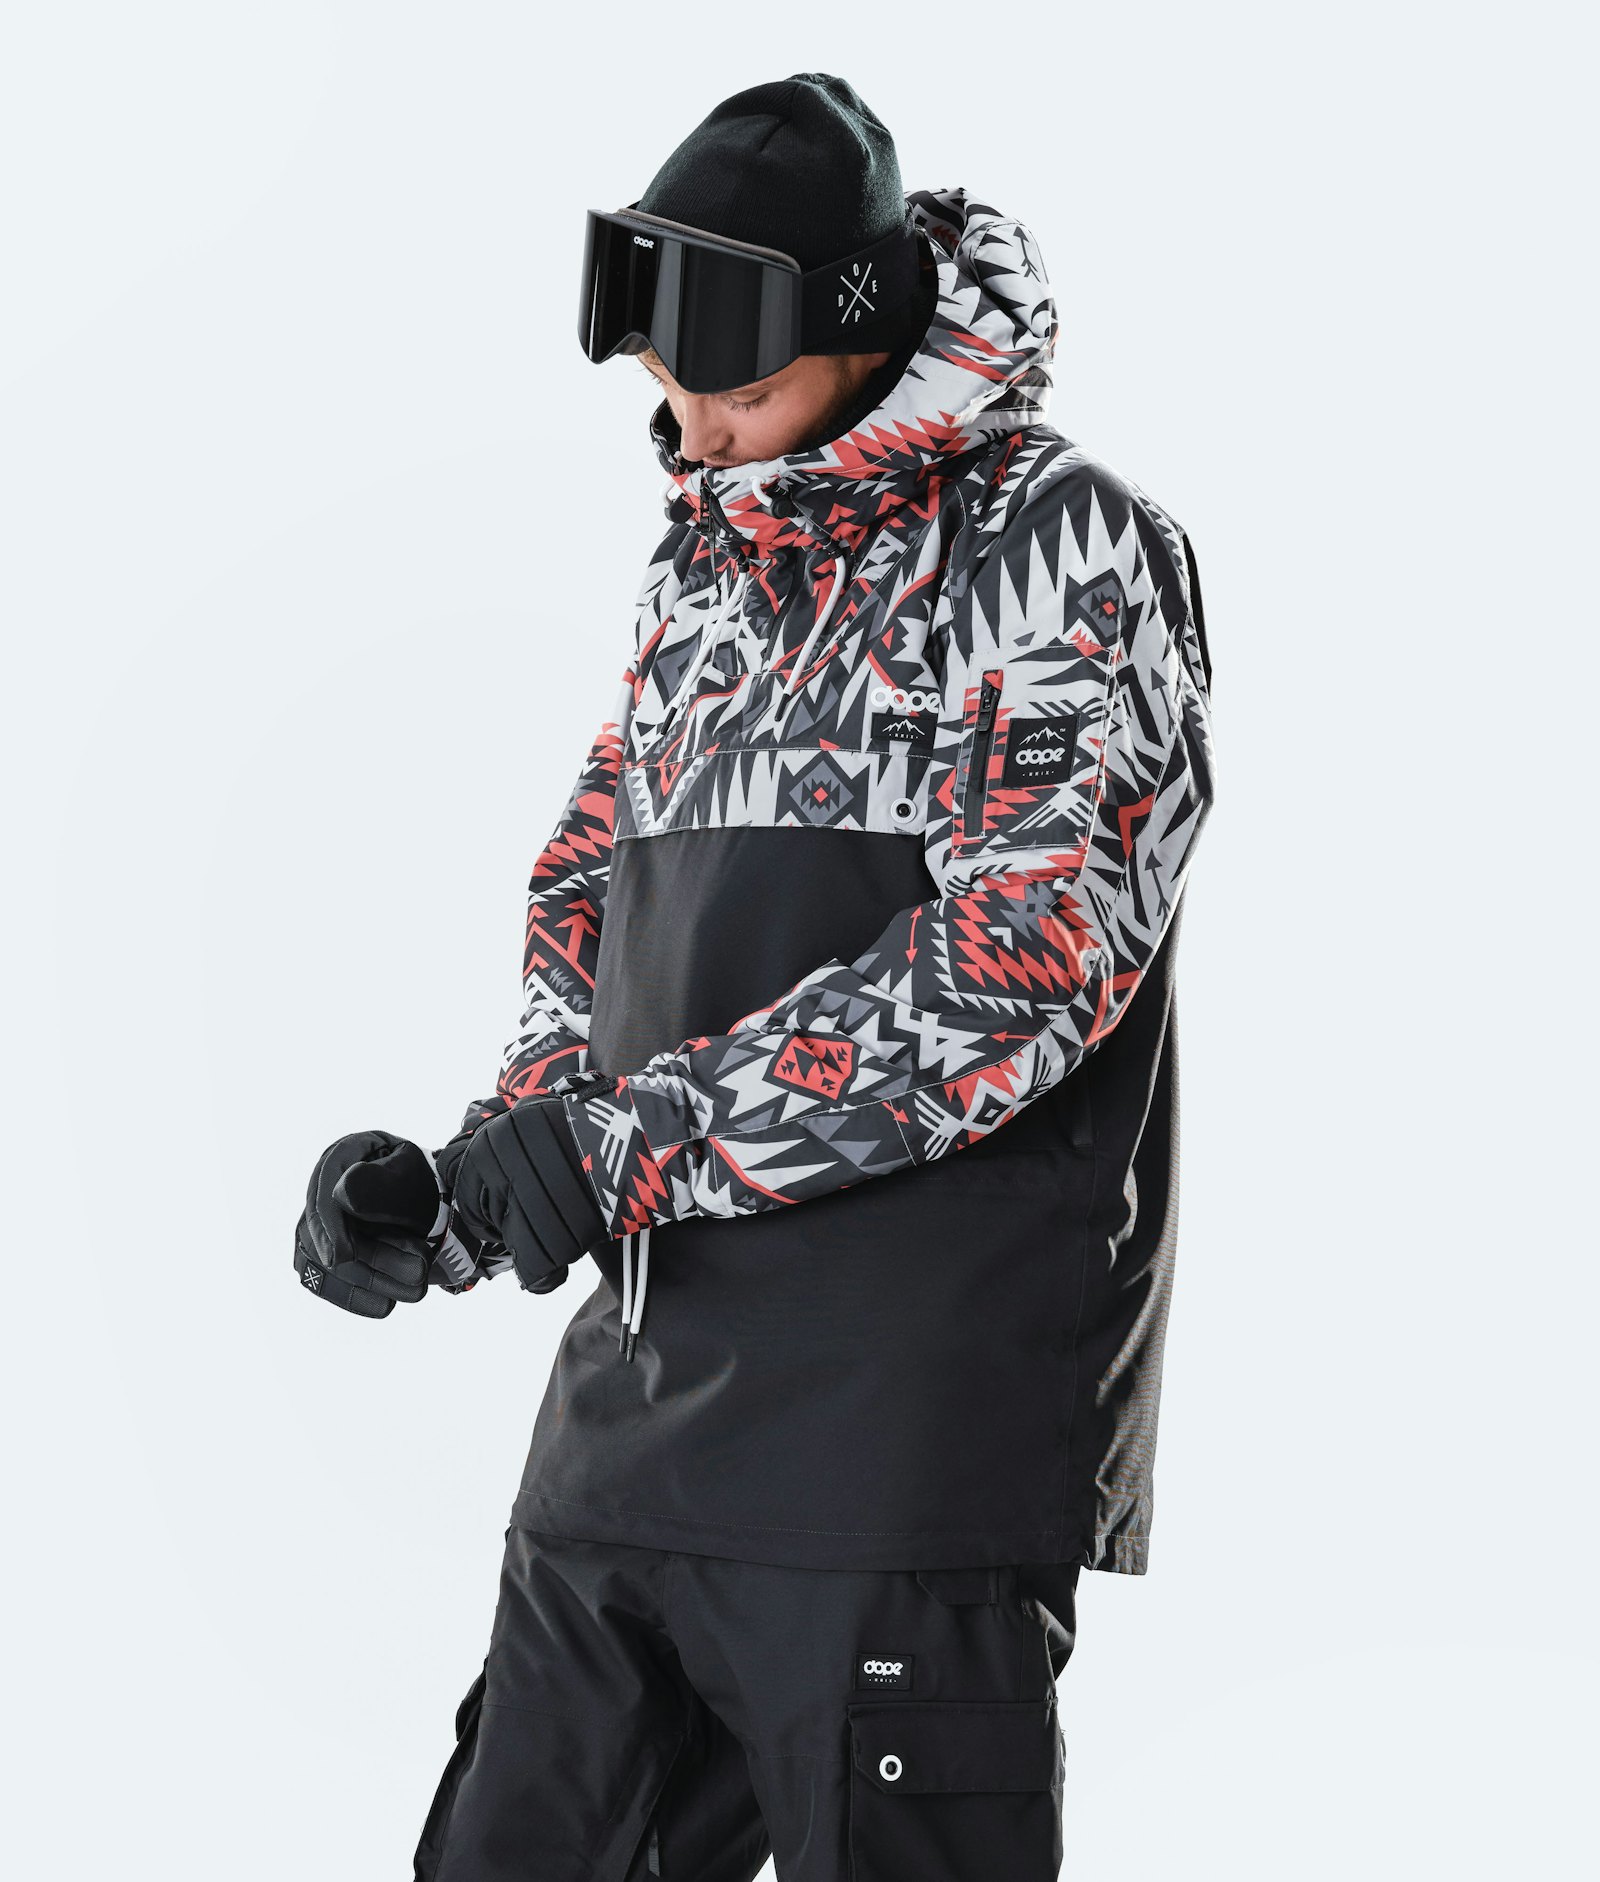 Dope Annok 2020 Veste Snowboard Homme Arrow Red/Black